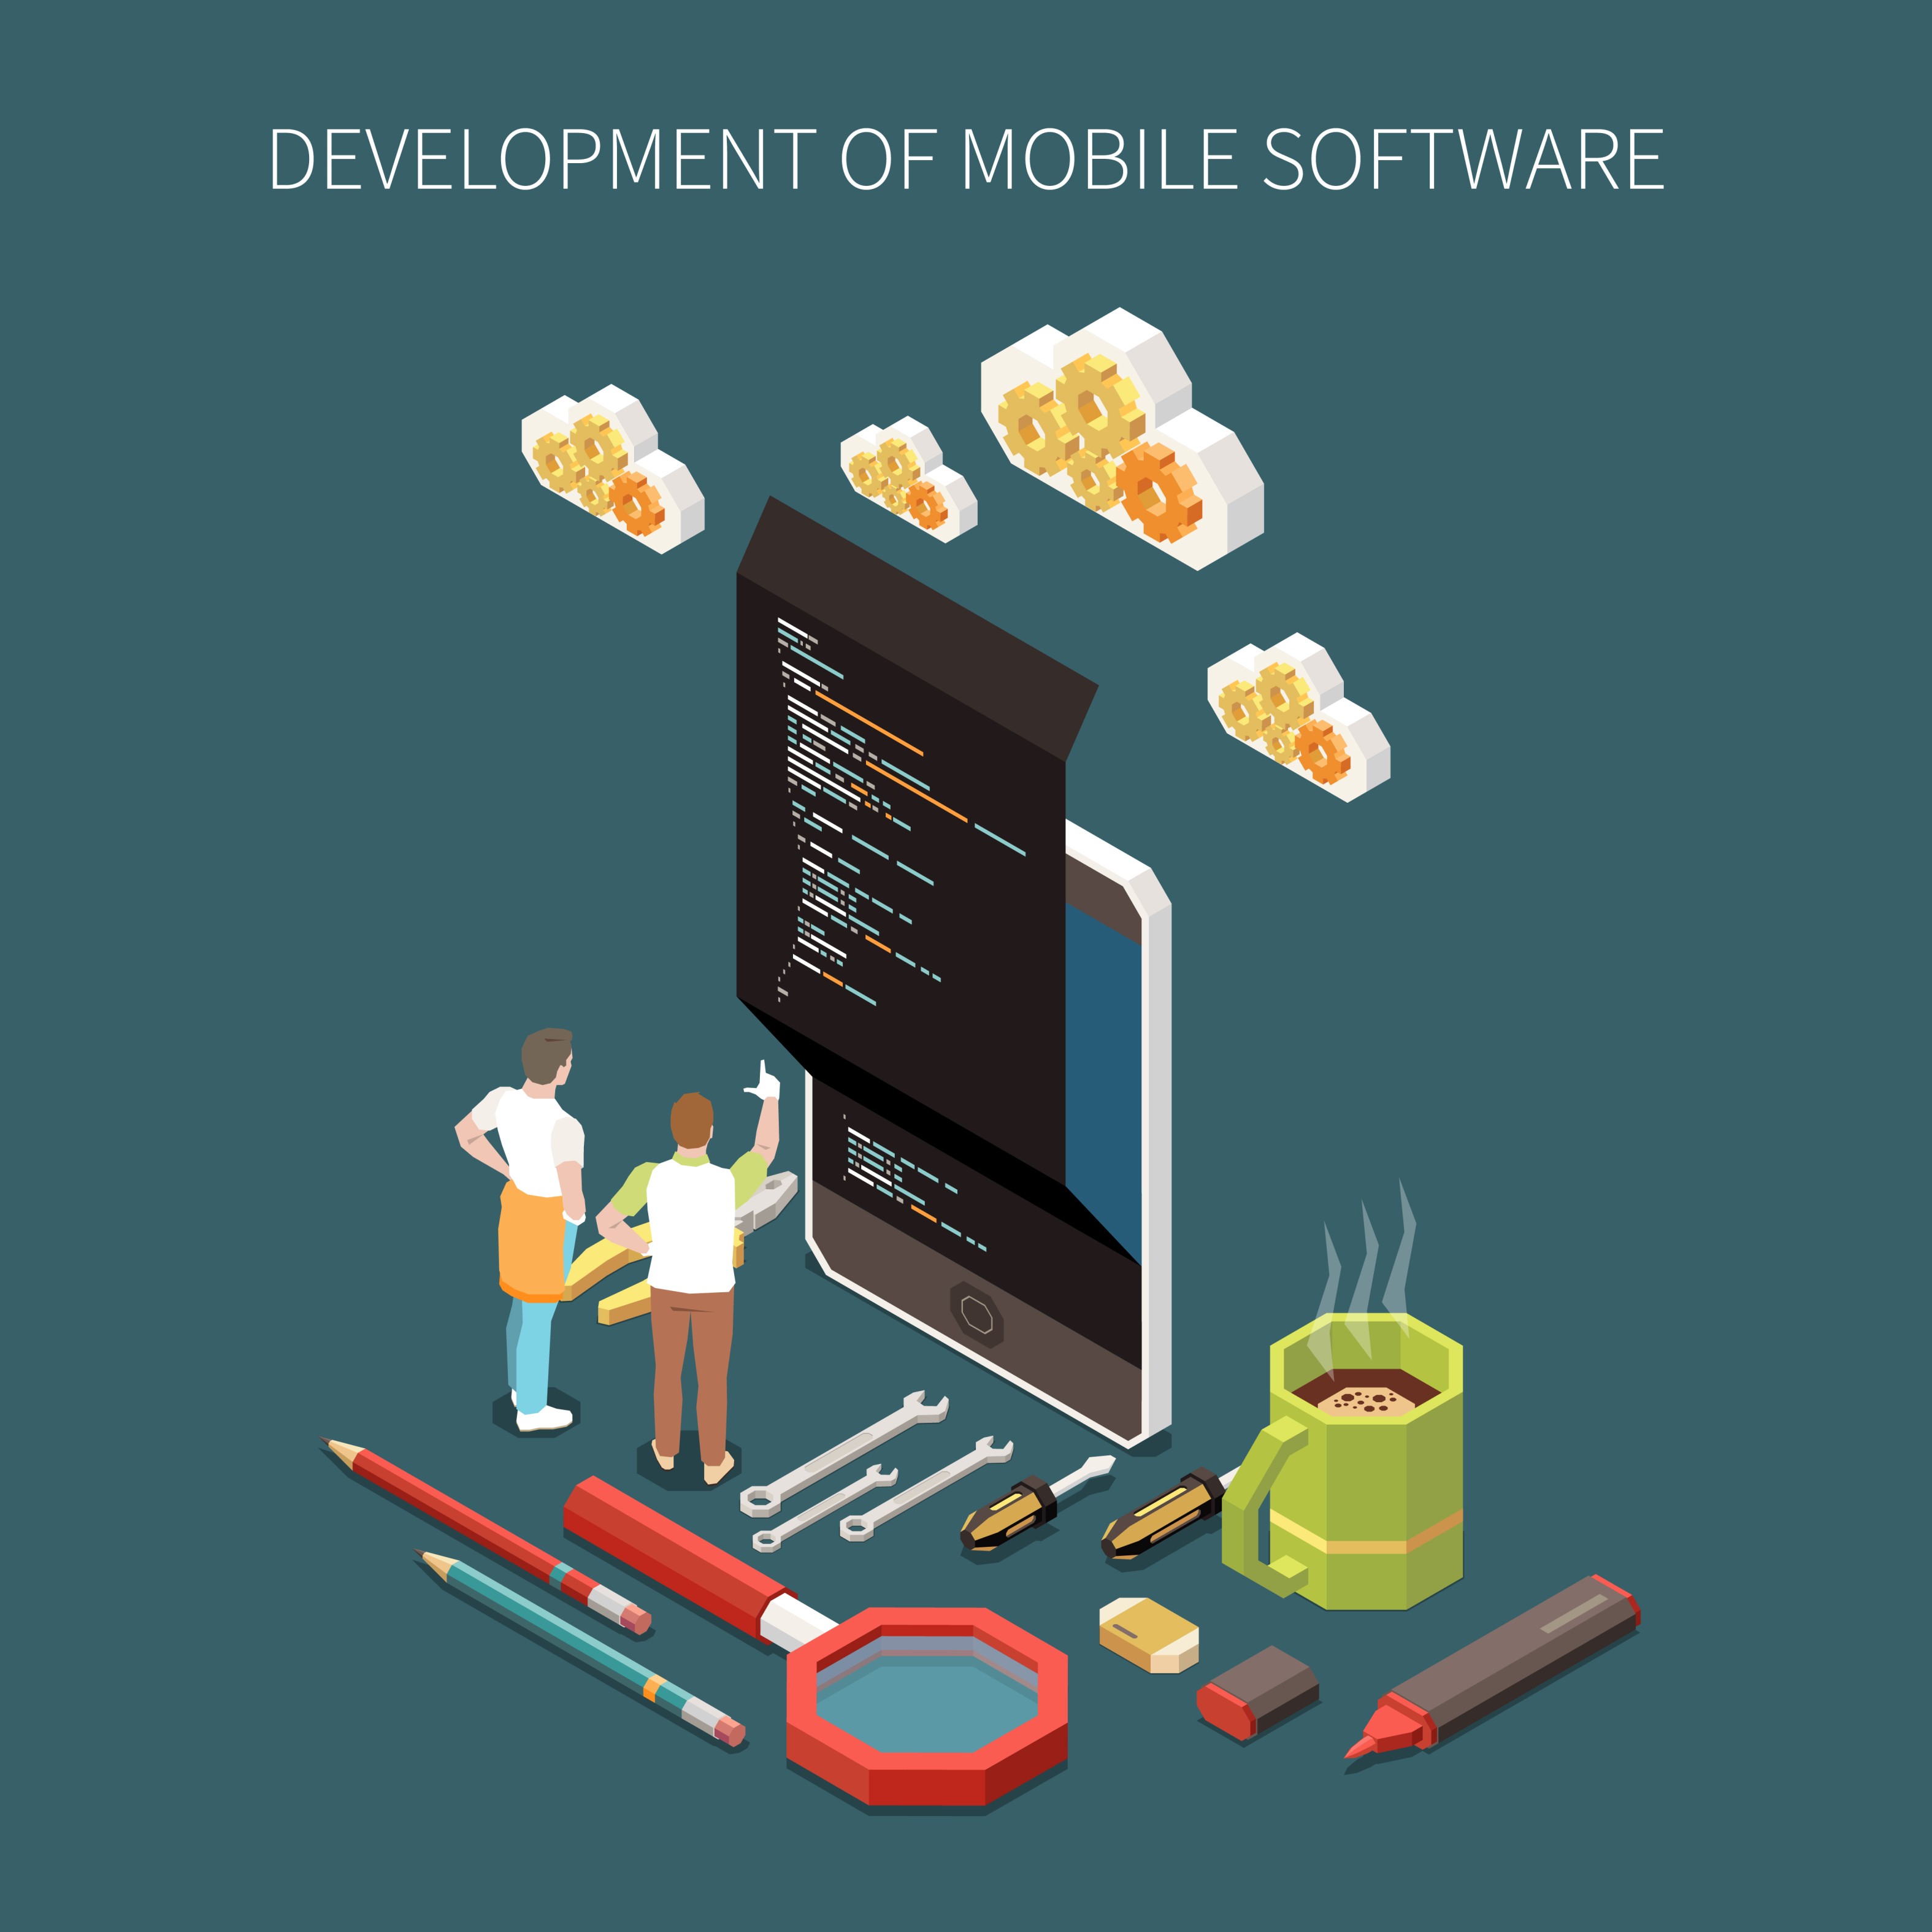 Choosing the Best App Development Tools